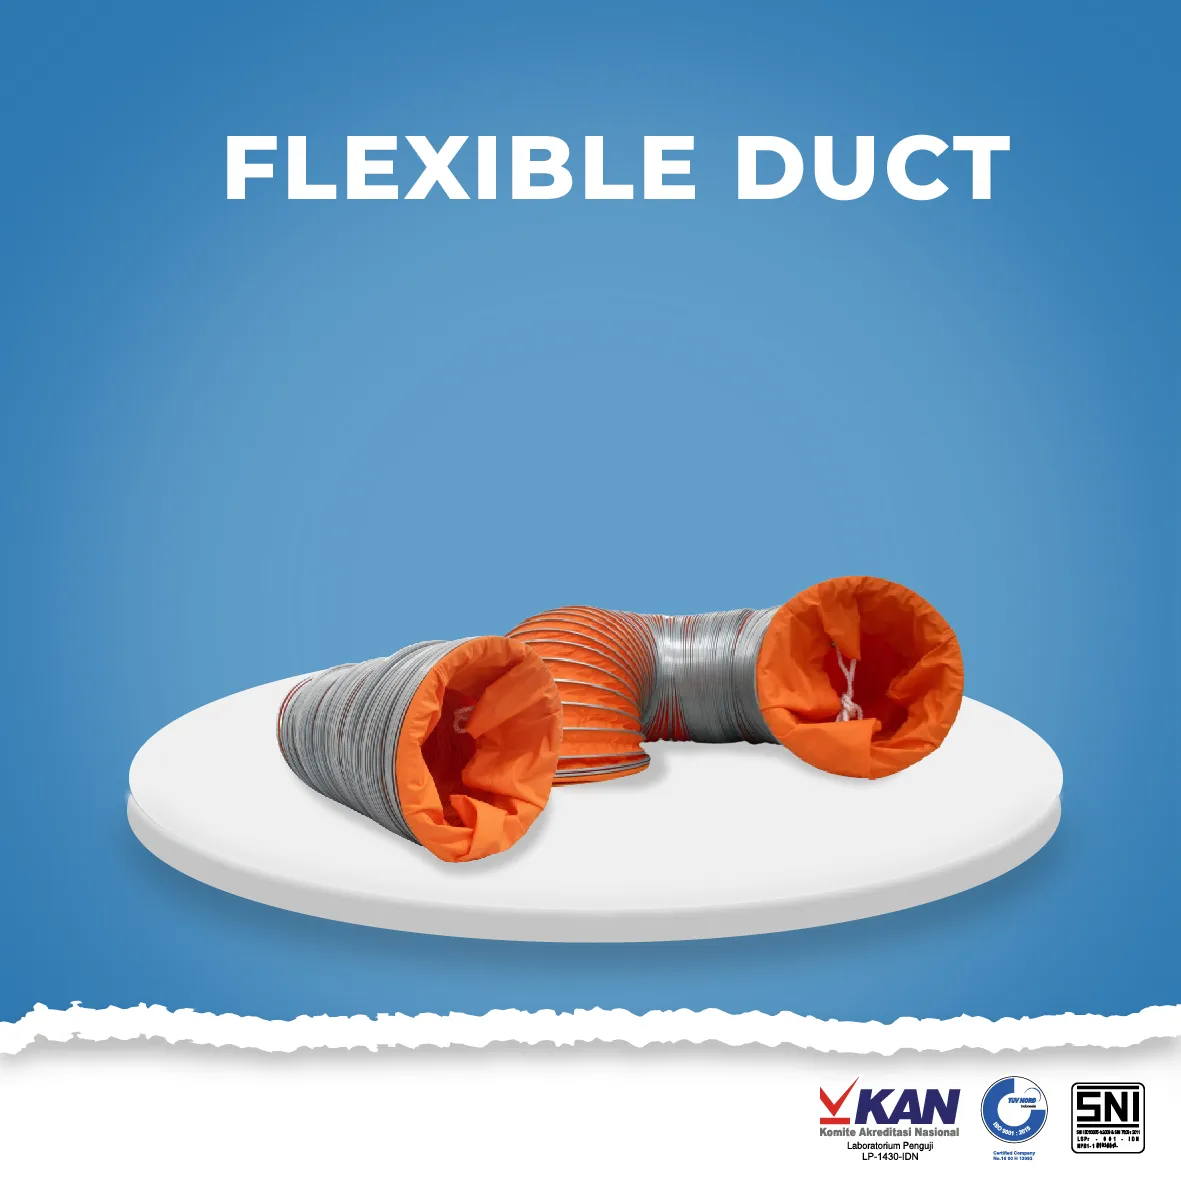  Flexible Duct non fan template cover website 02